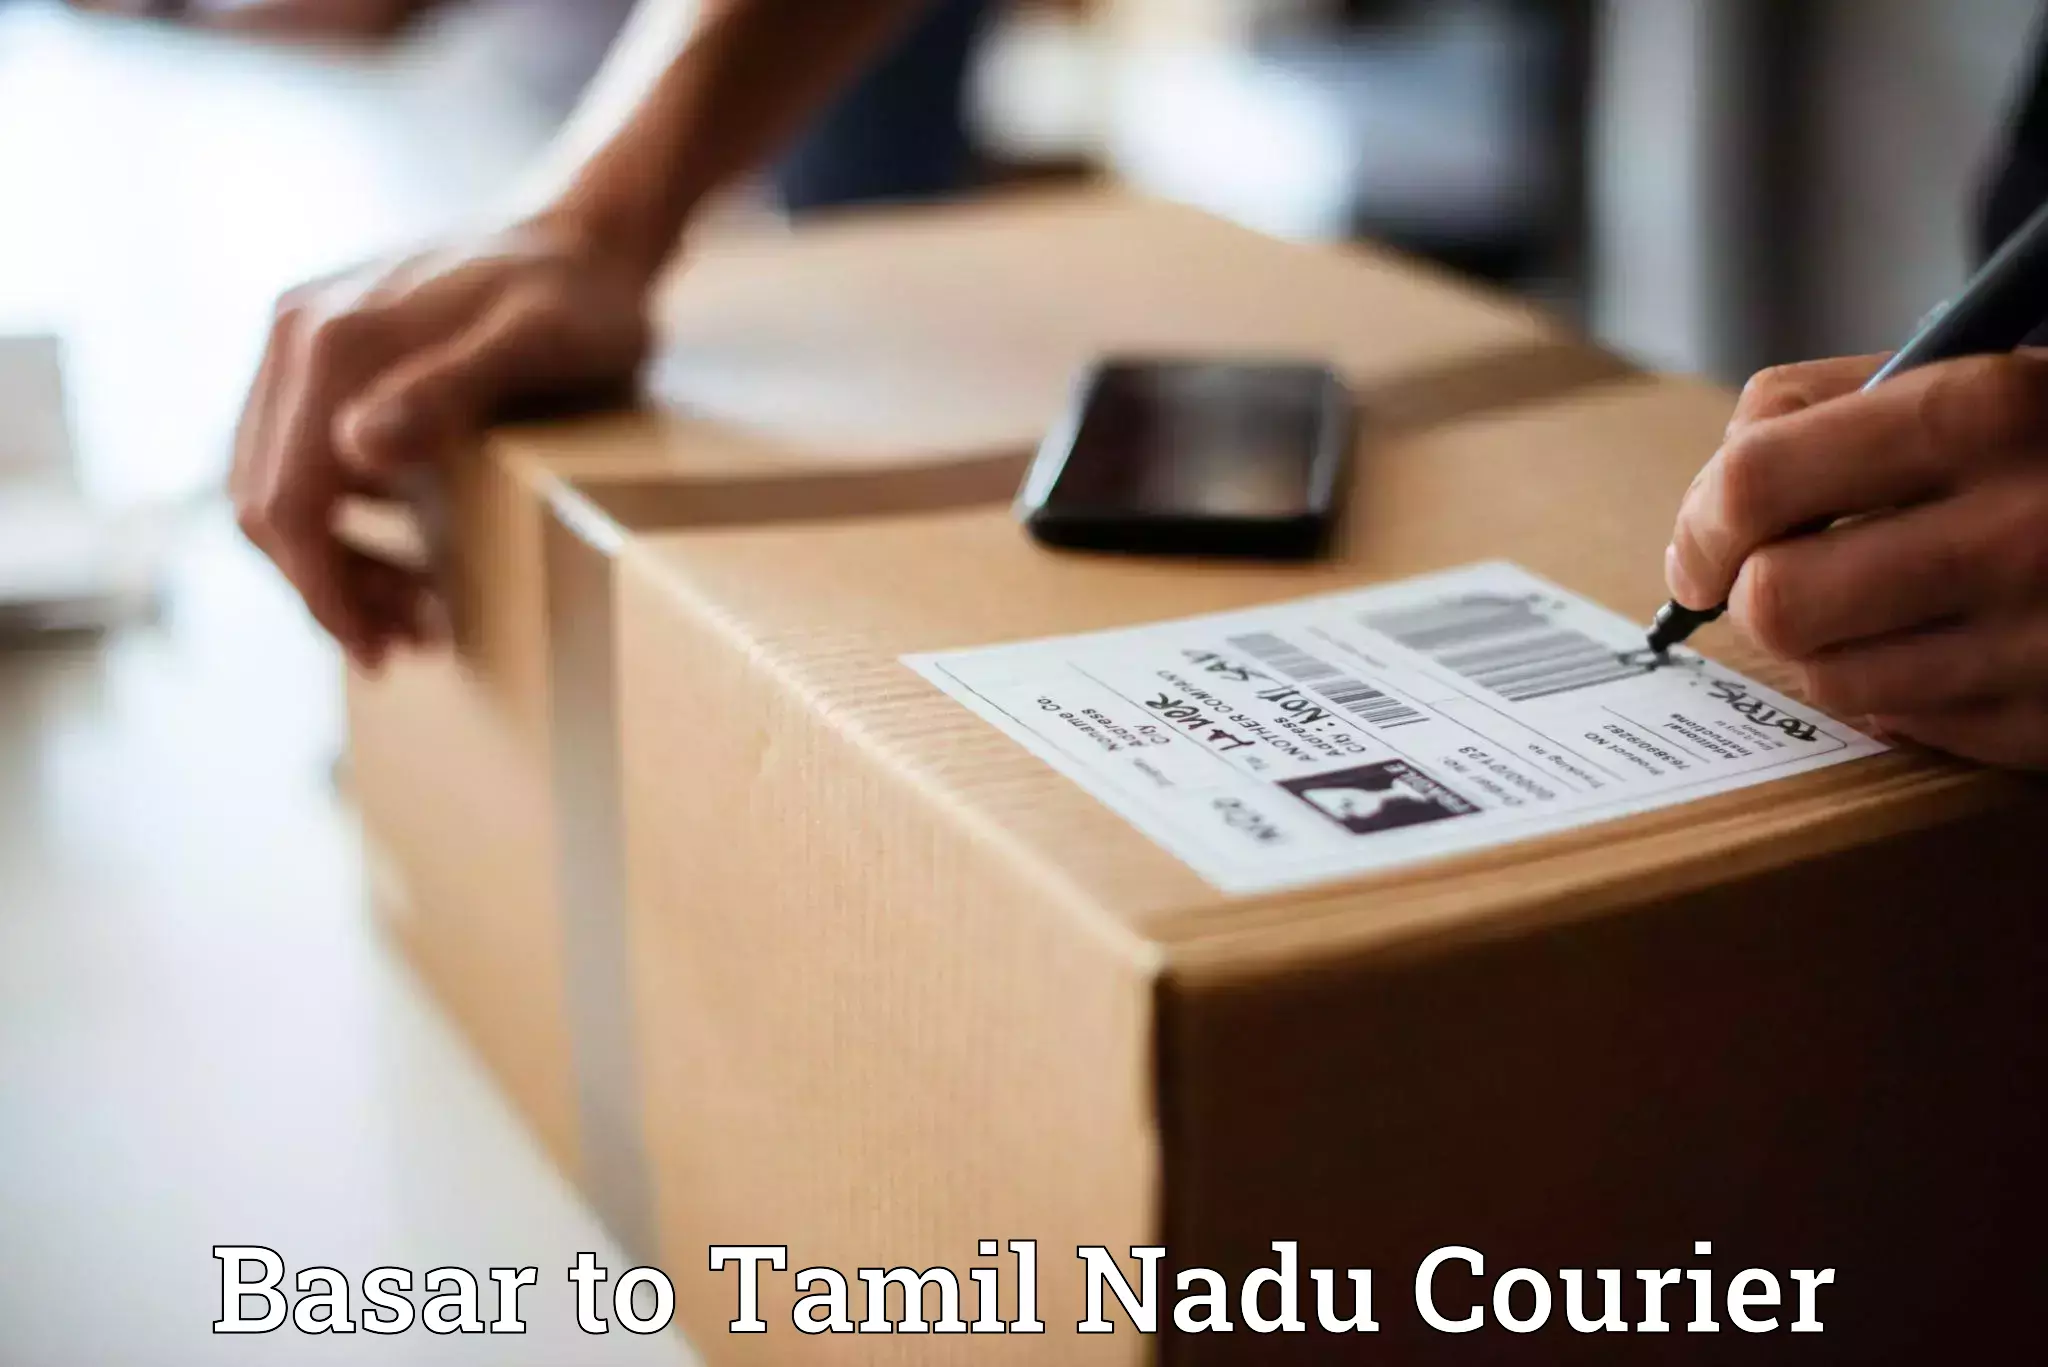 Courier service innovation Basar to Tamil Nadu